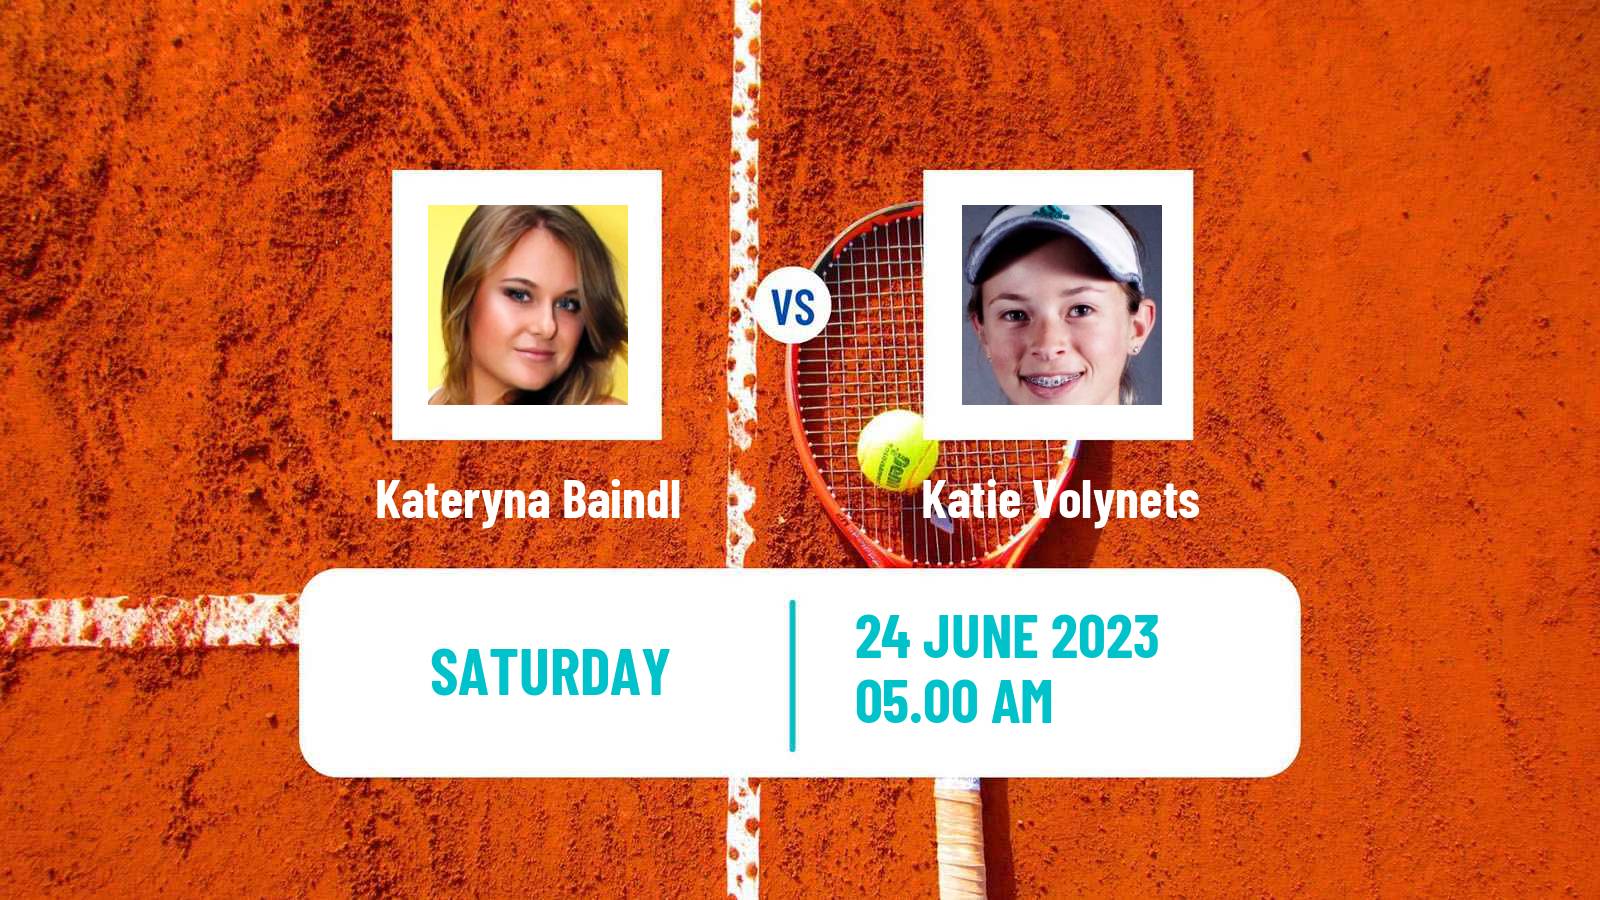 Tennis WTA Bad Homburg Kateryna Baindl - Katie Volynets